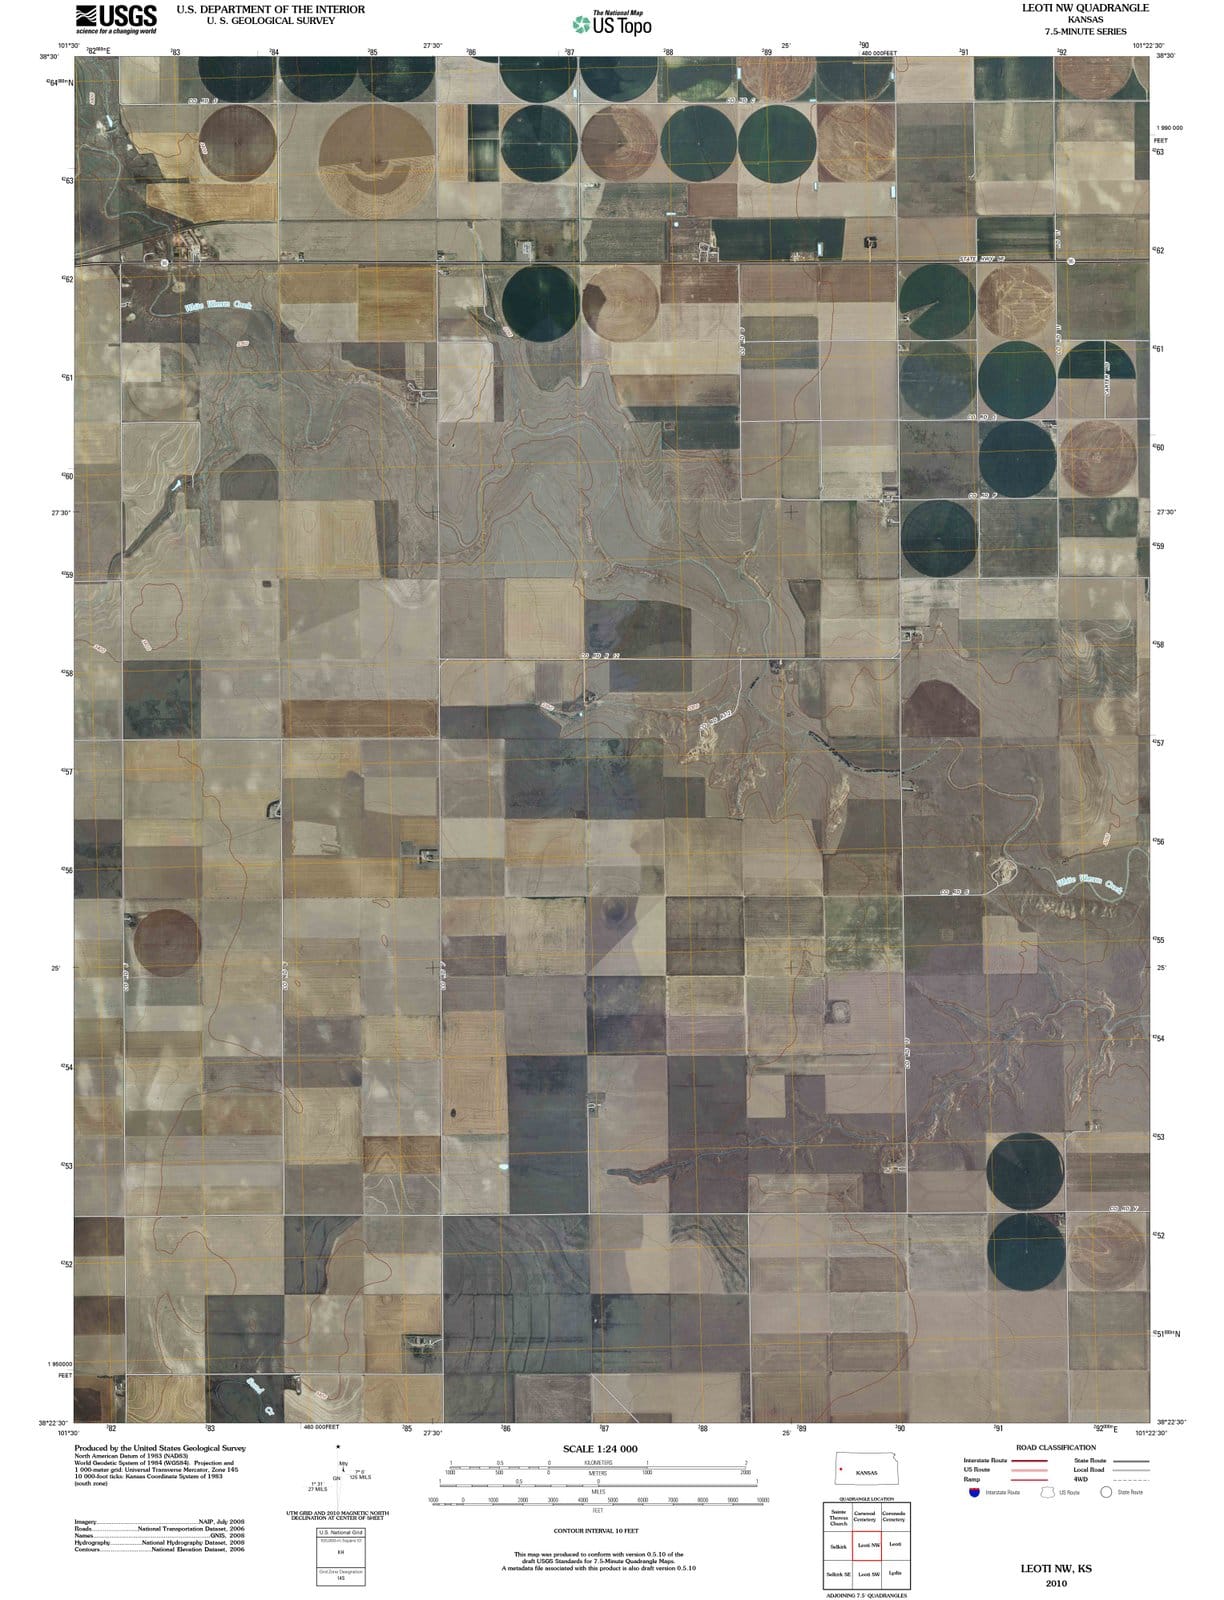 2010 Leoti, KS - Kansas - USGS Topographic Map